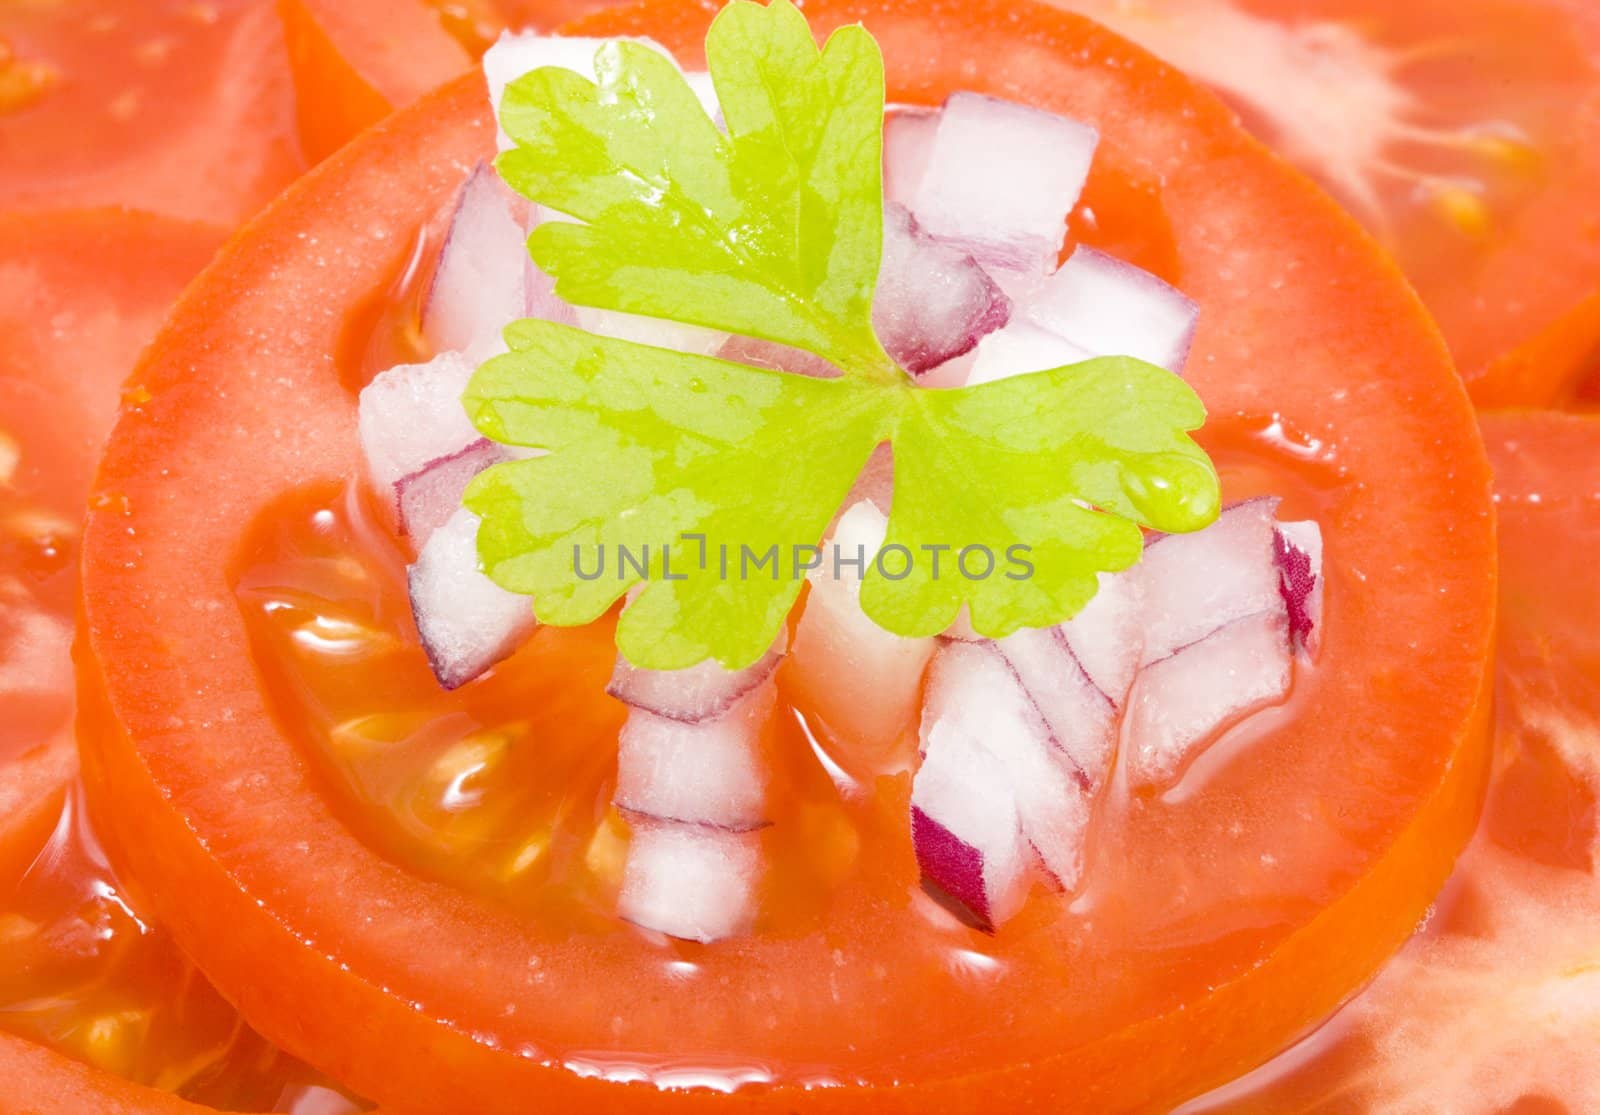 Tomatoe Salad by werg